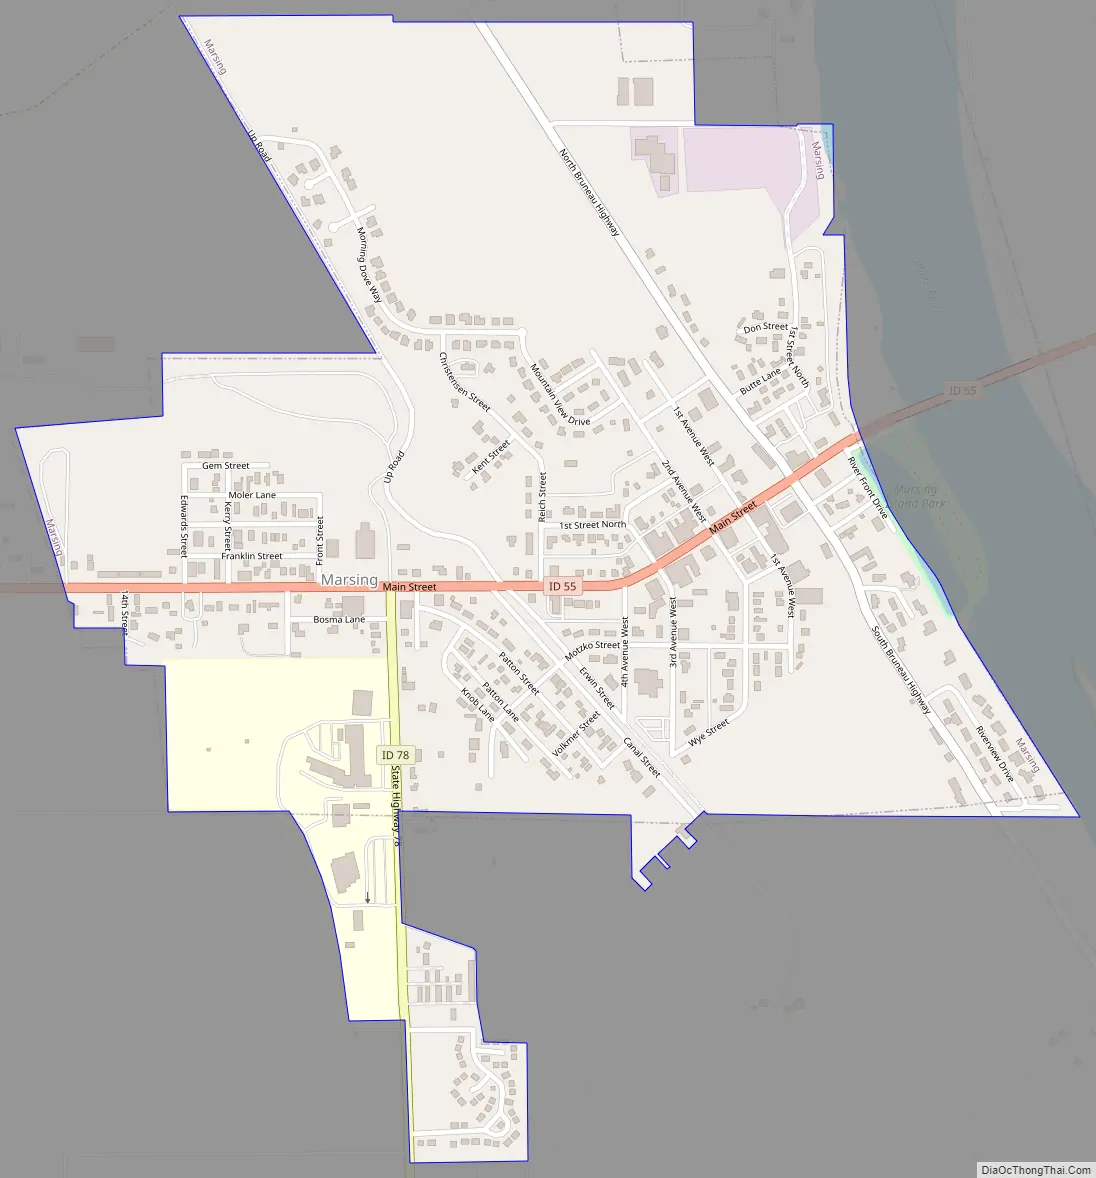 Map of Marsing city